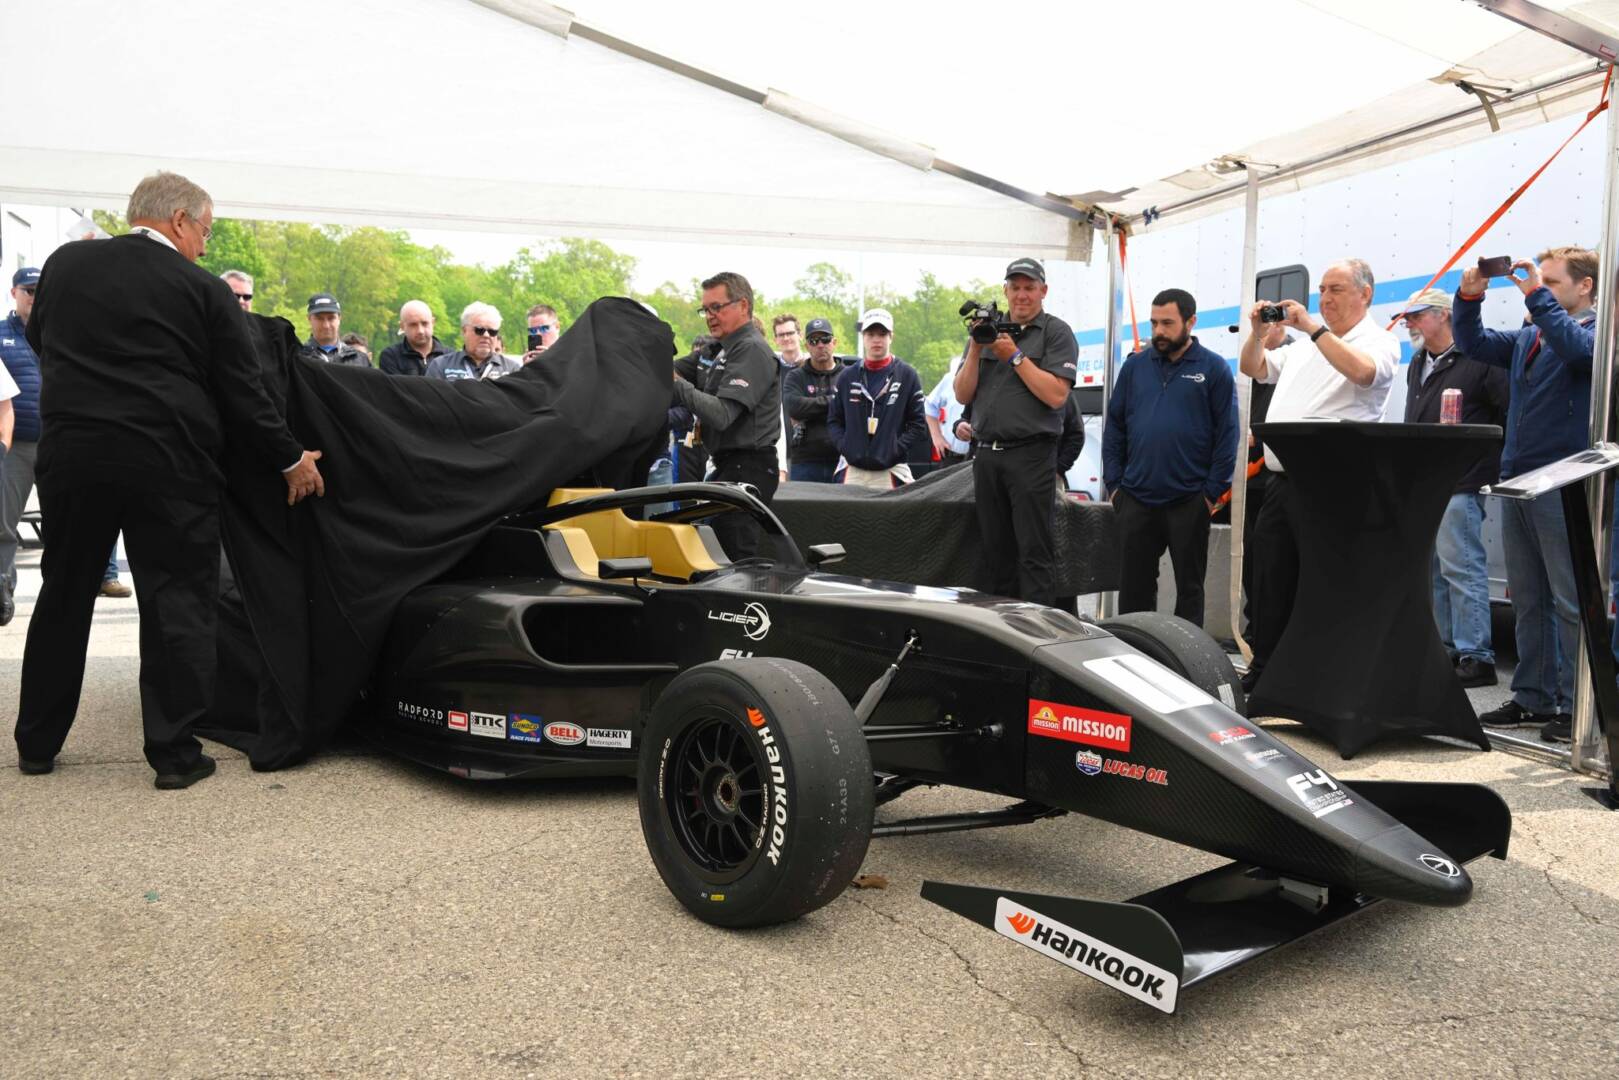 Ligier JS F422 unveil at Road America